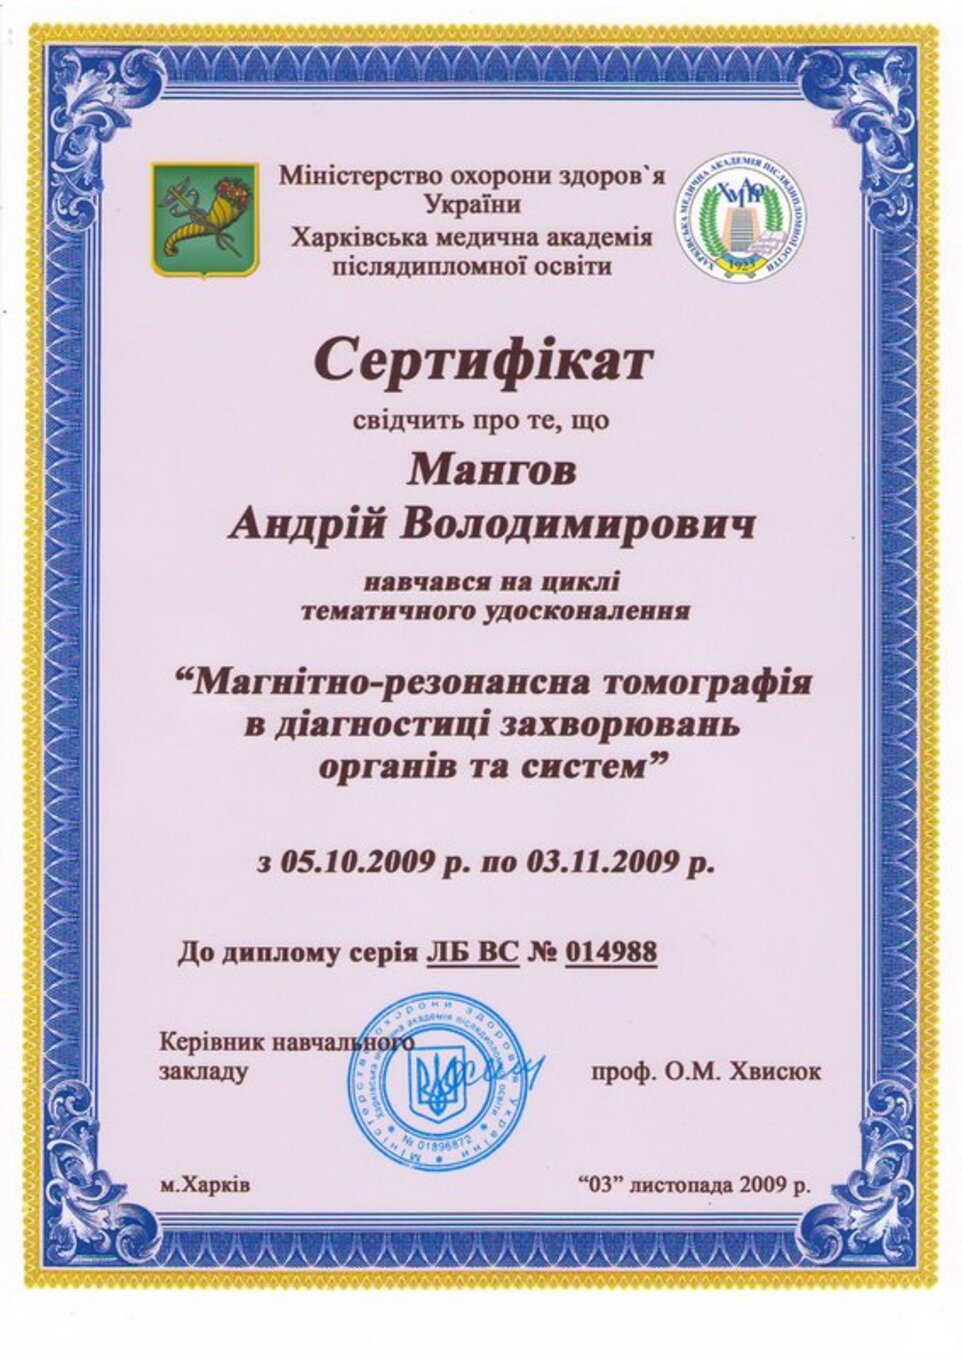 certificates/mangov-andrij-volodimirovich/mangov-certificates-15.jpg